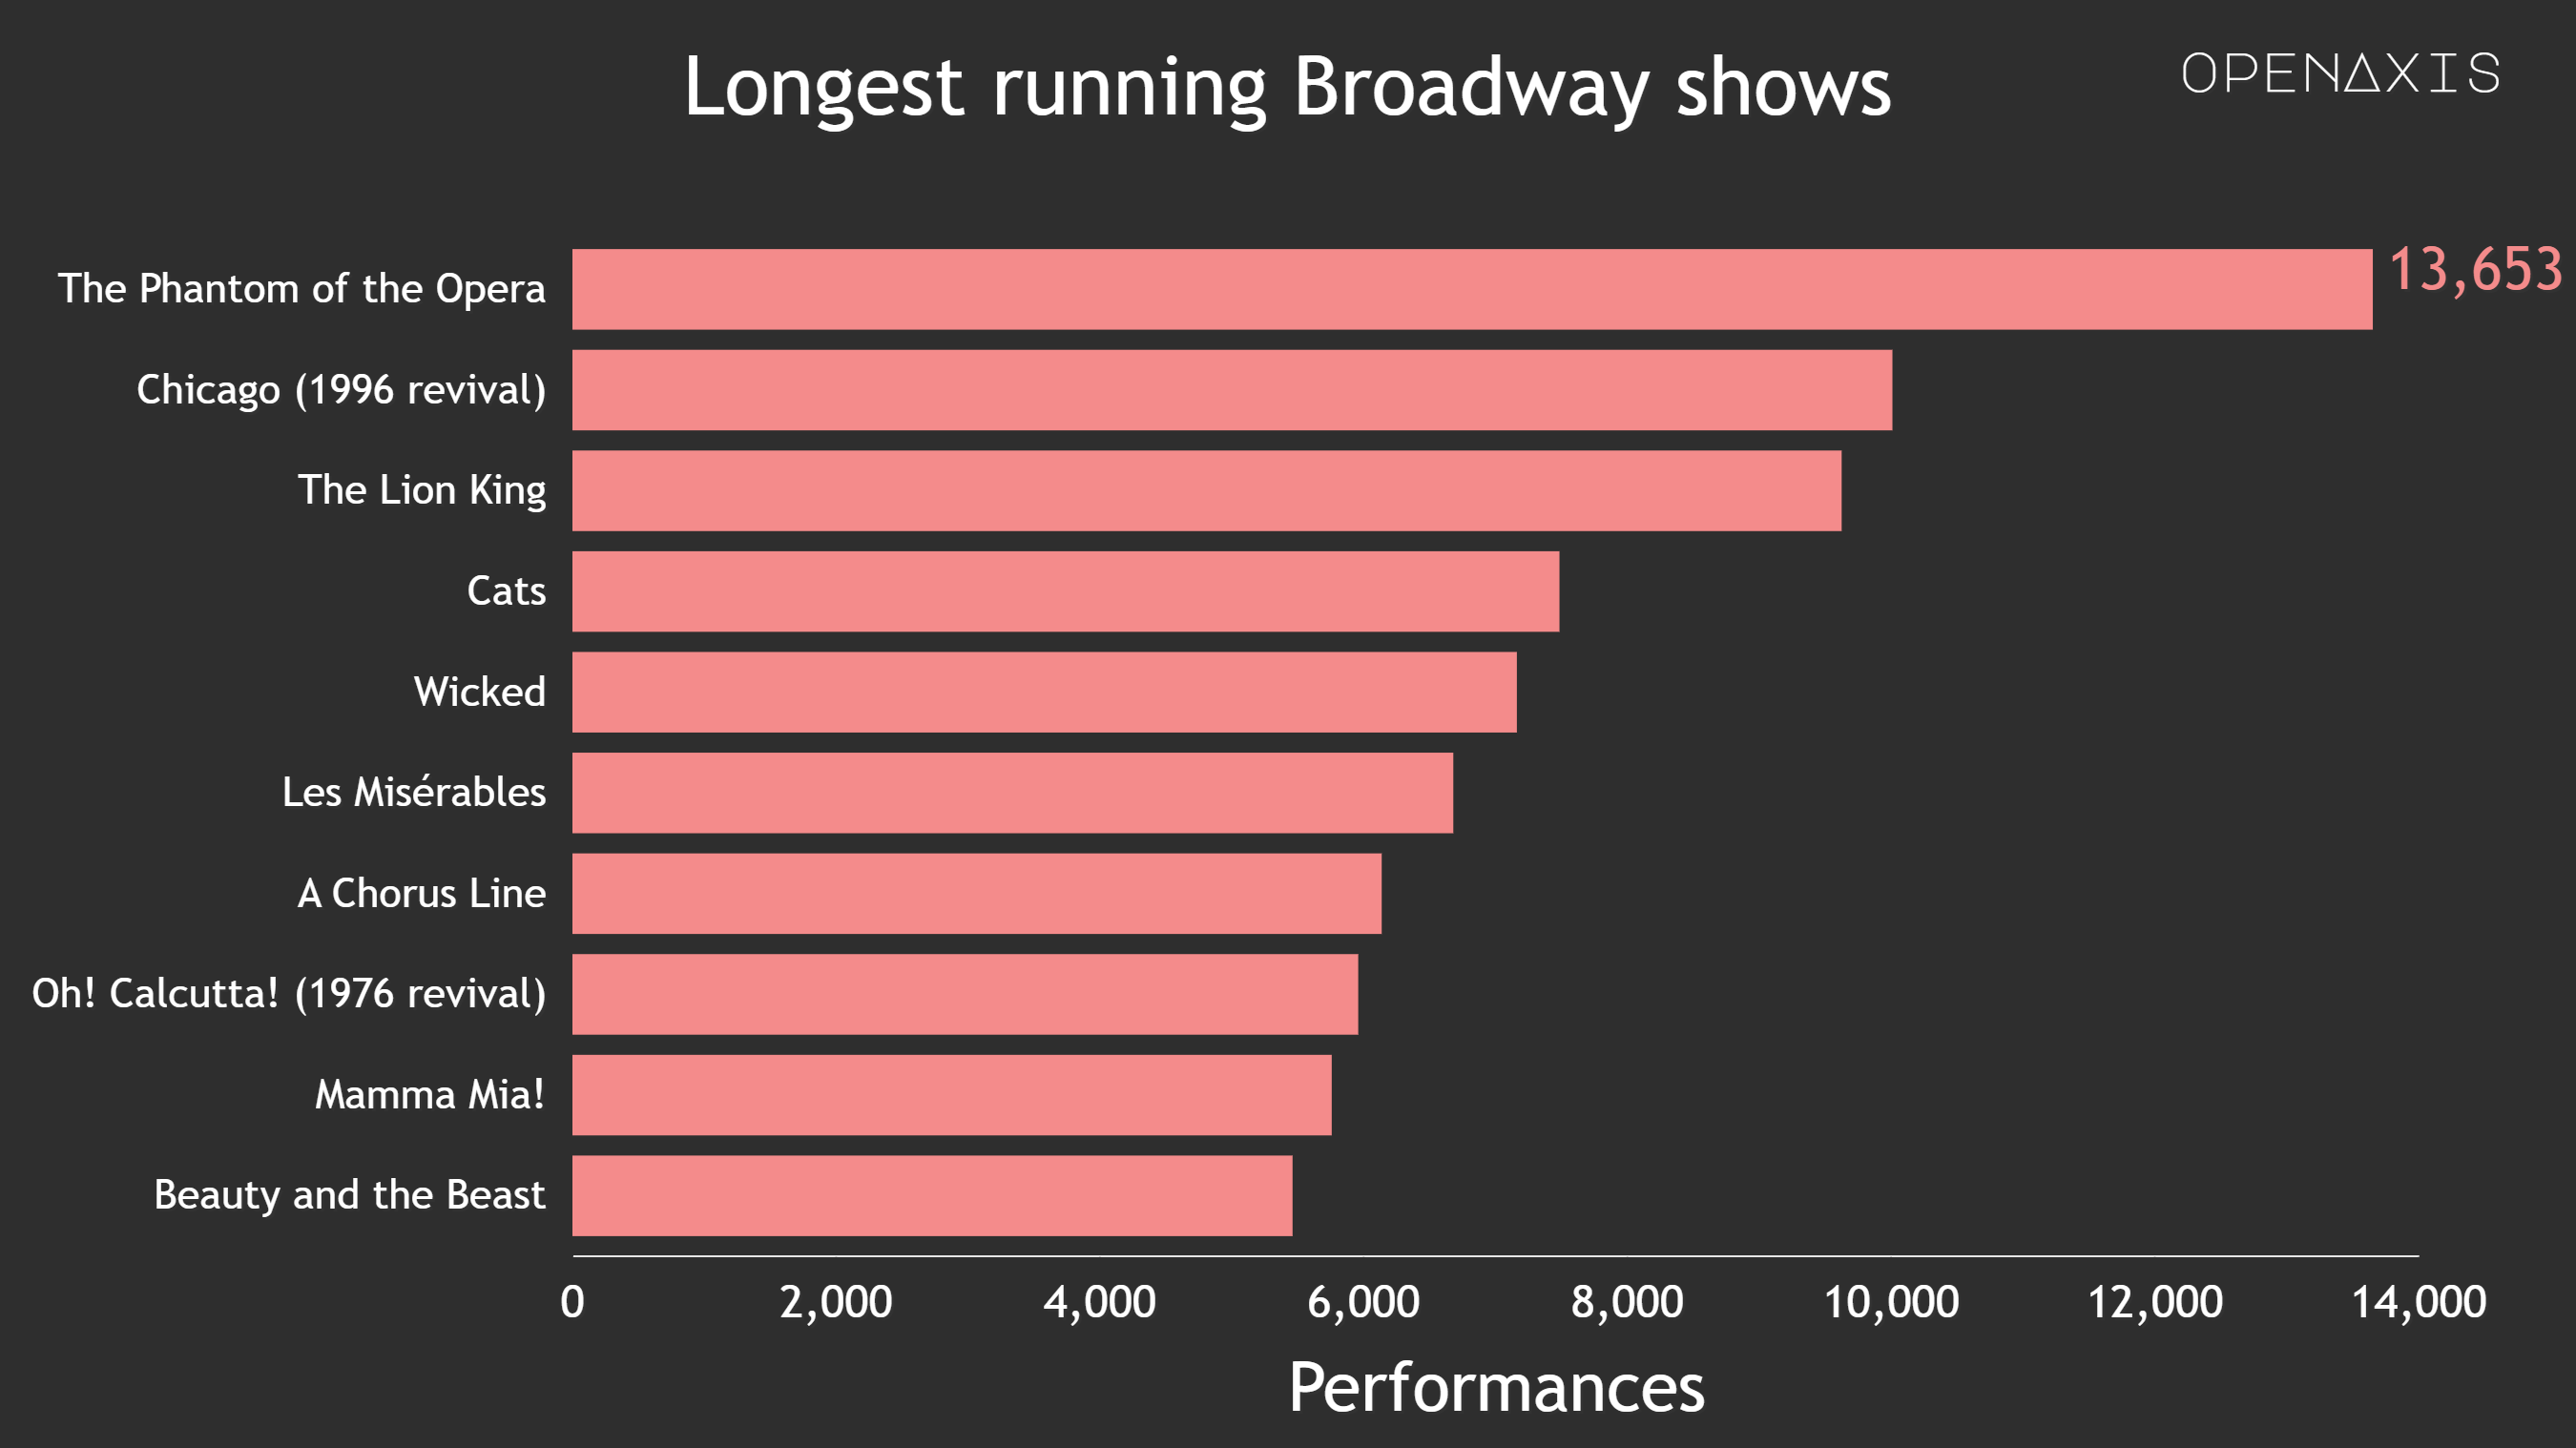 "Longest running Broadway shows"